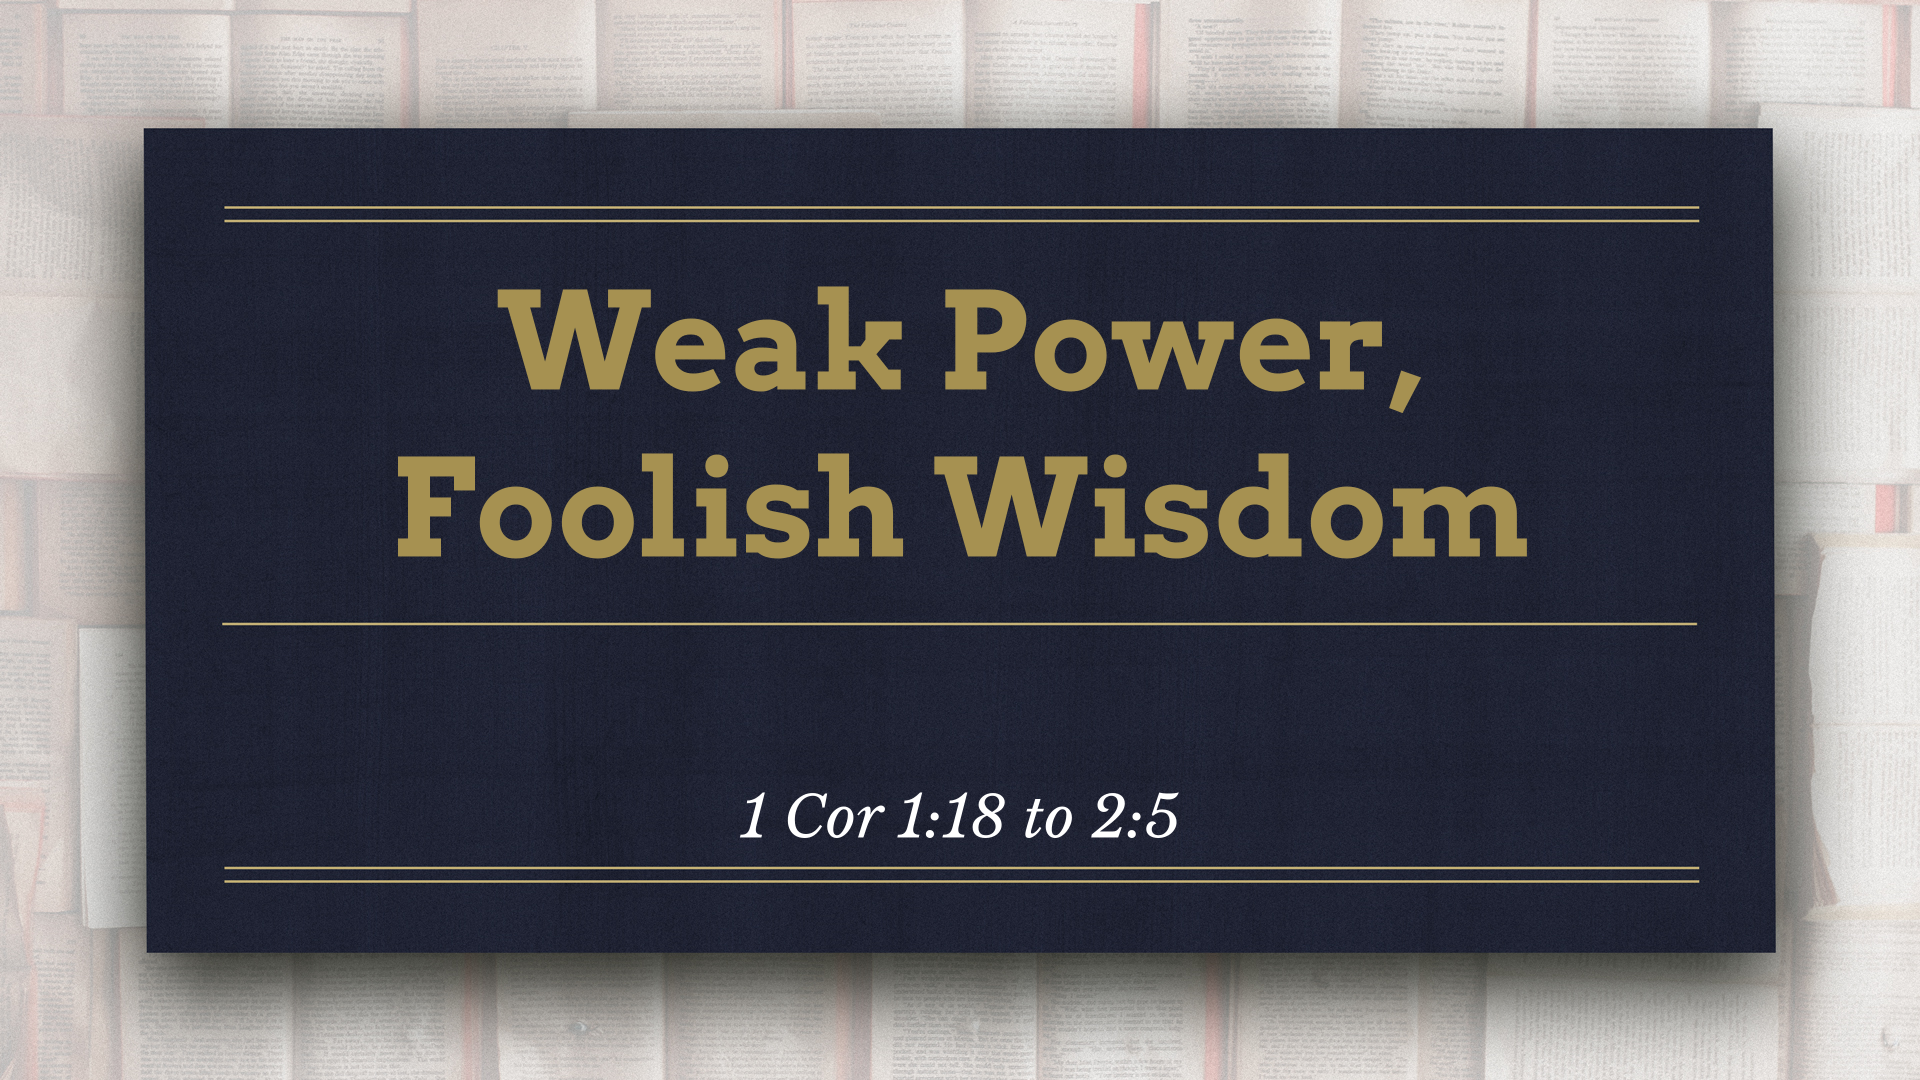 Feb 28, 2021 - Weak Power, Foolish Wisdom (Video) - 1 Cor 1:18 to 2:5